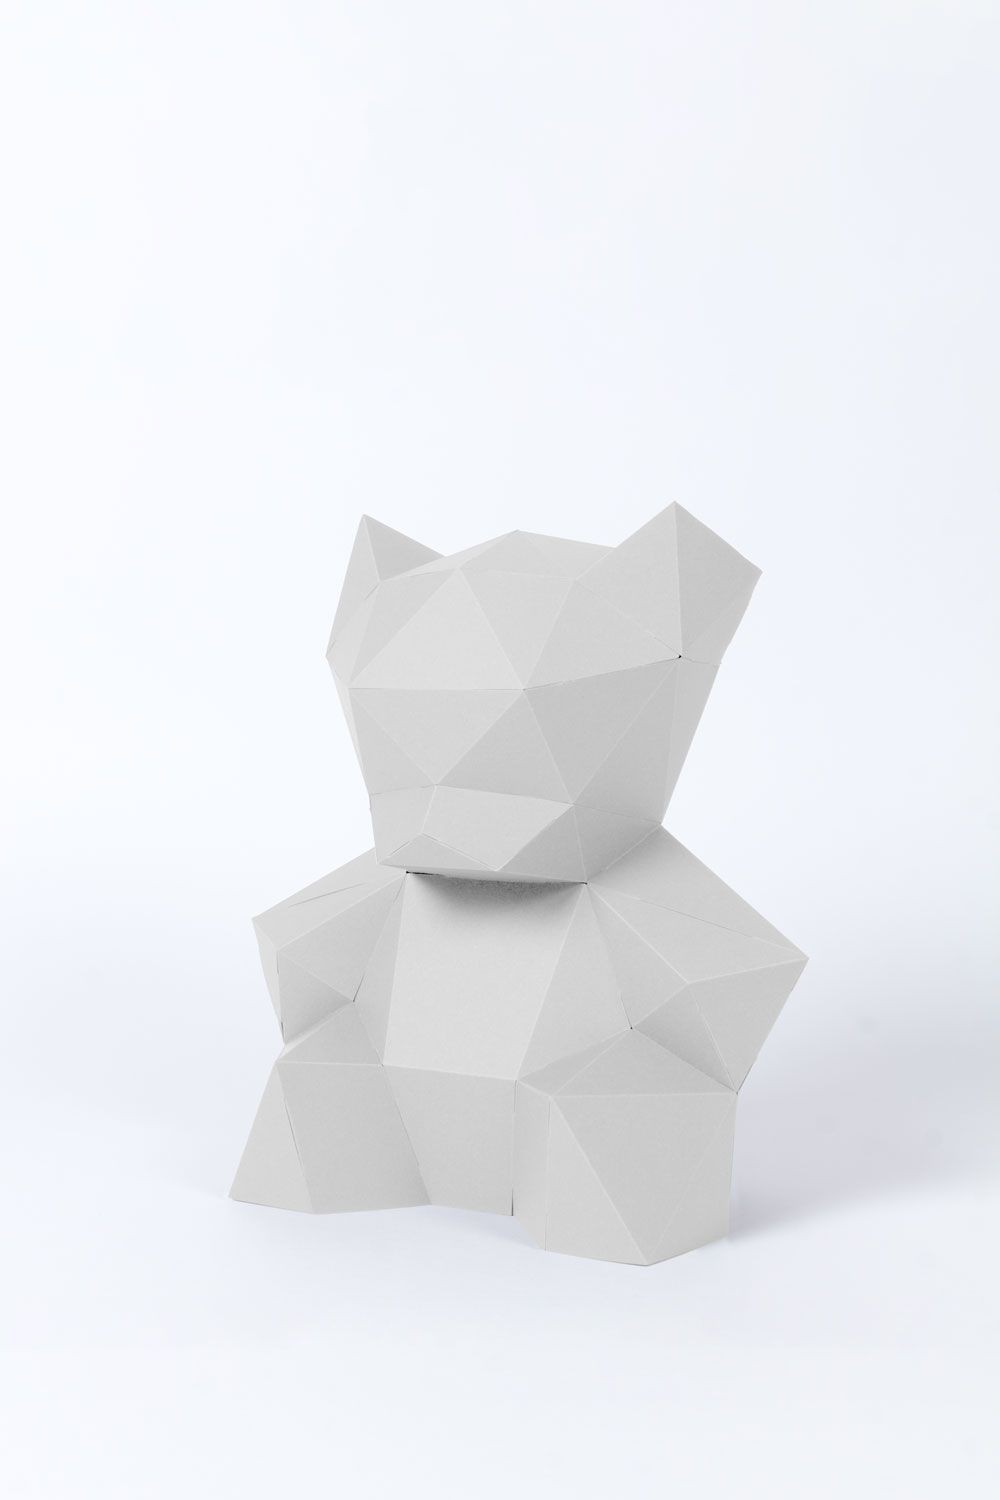 Bear Papercraft 3d Paper Teddy Bear Precut Prefold No Glue